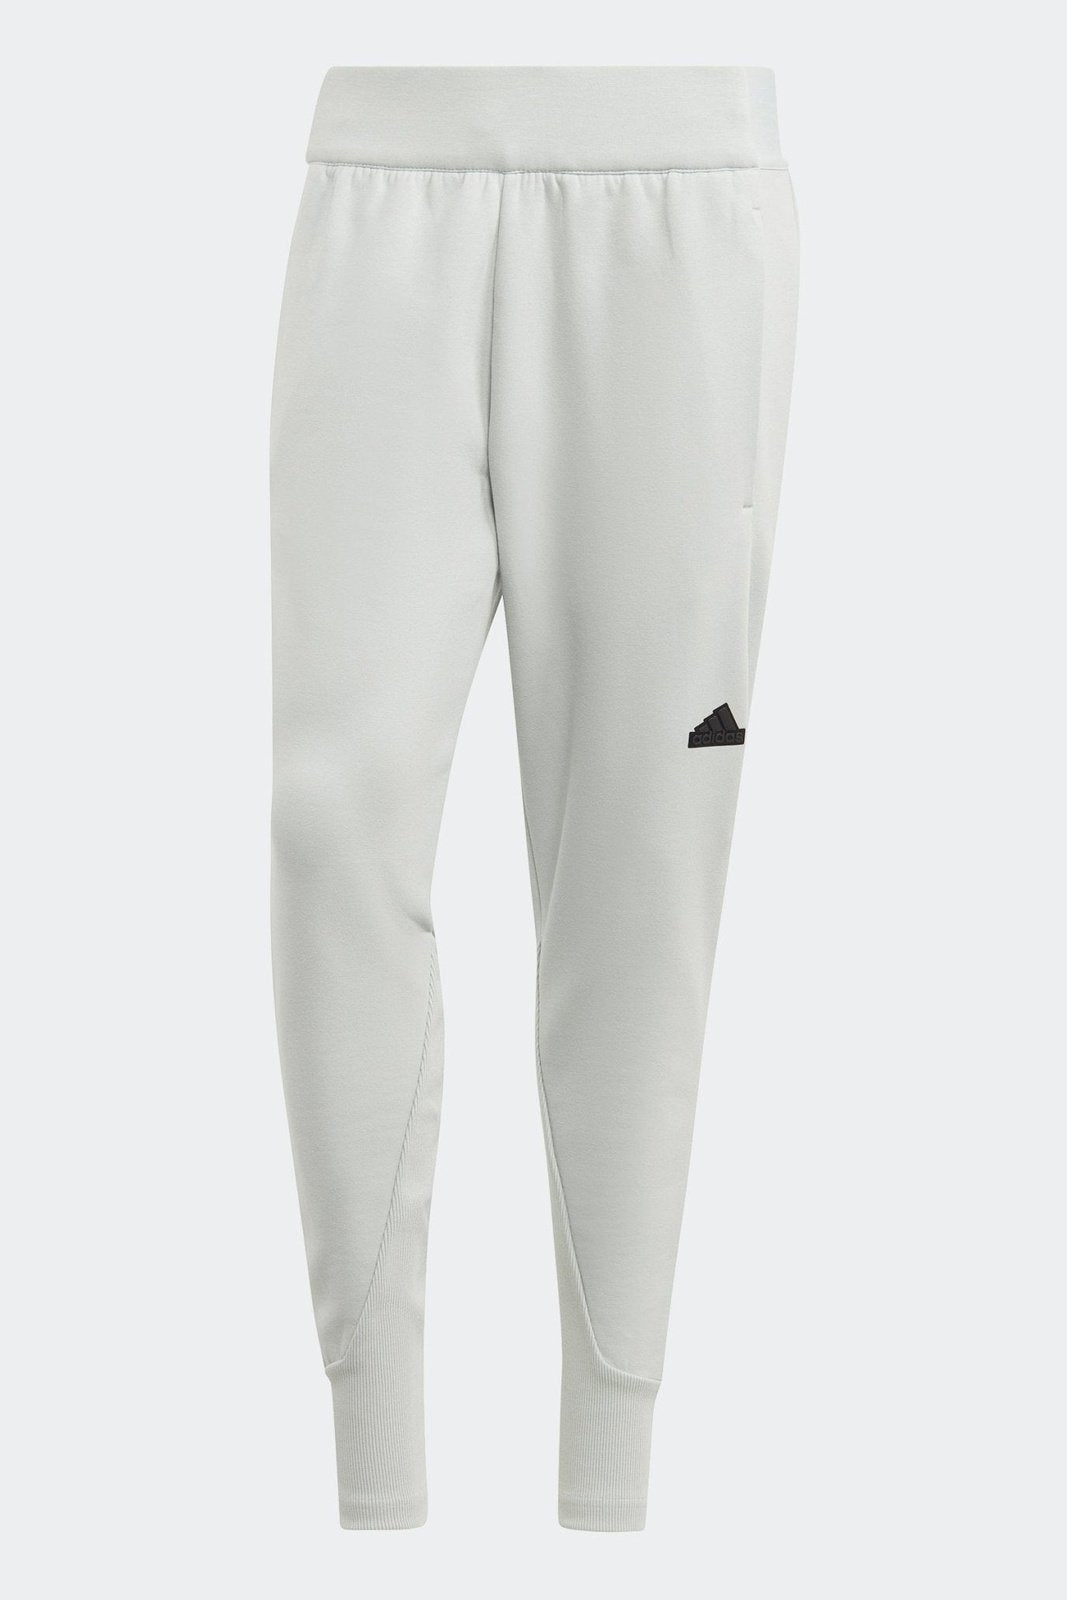 ADIDAS - מכנסיים ארוכים לגברים Z.N.E. PREMIUM בצבע לבן - MASHBIR//365